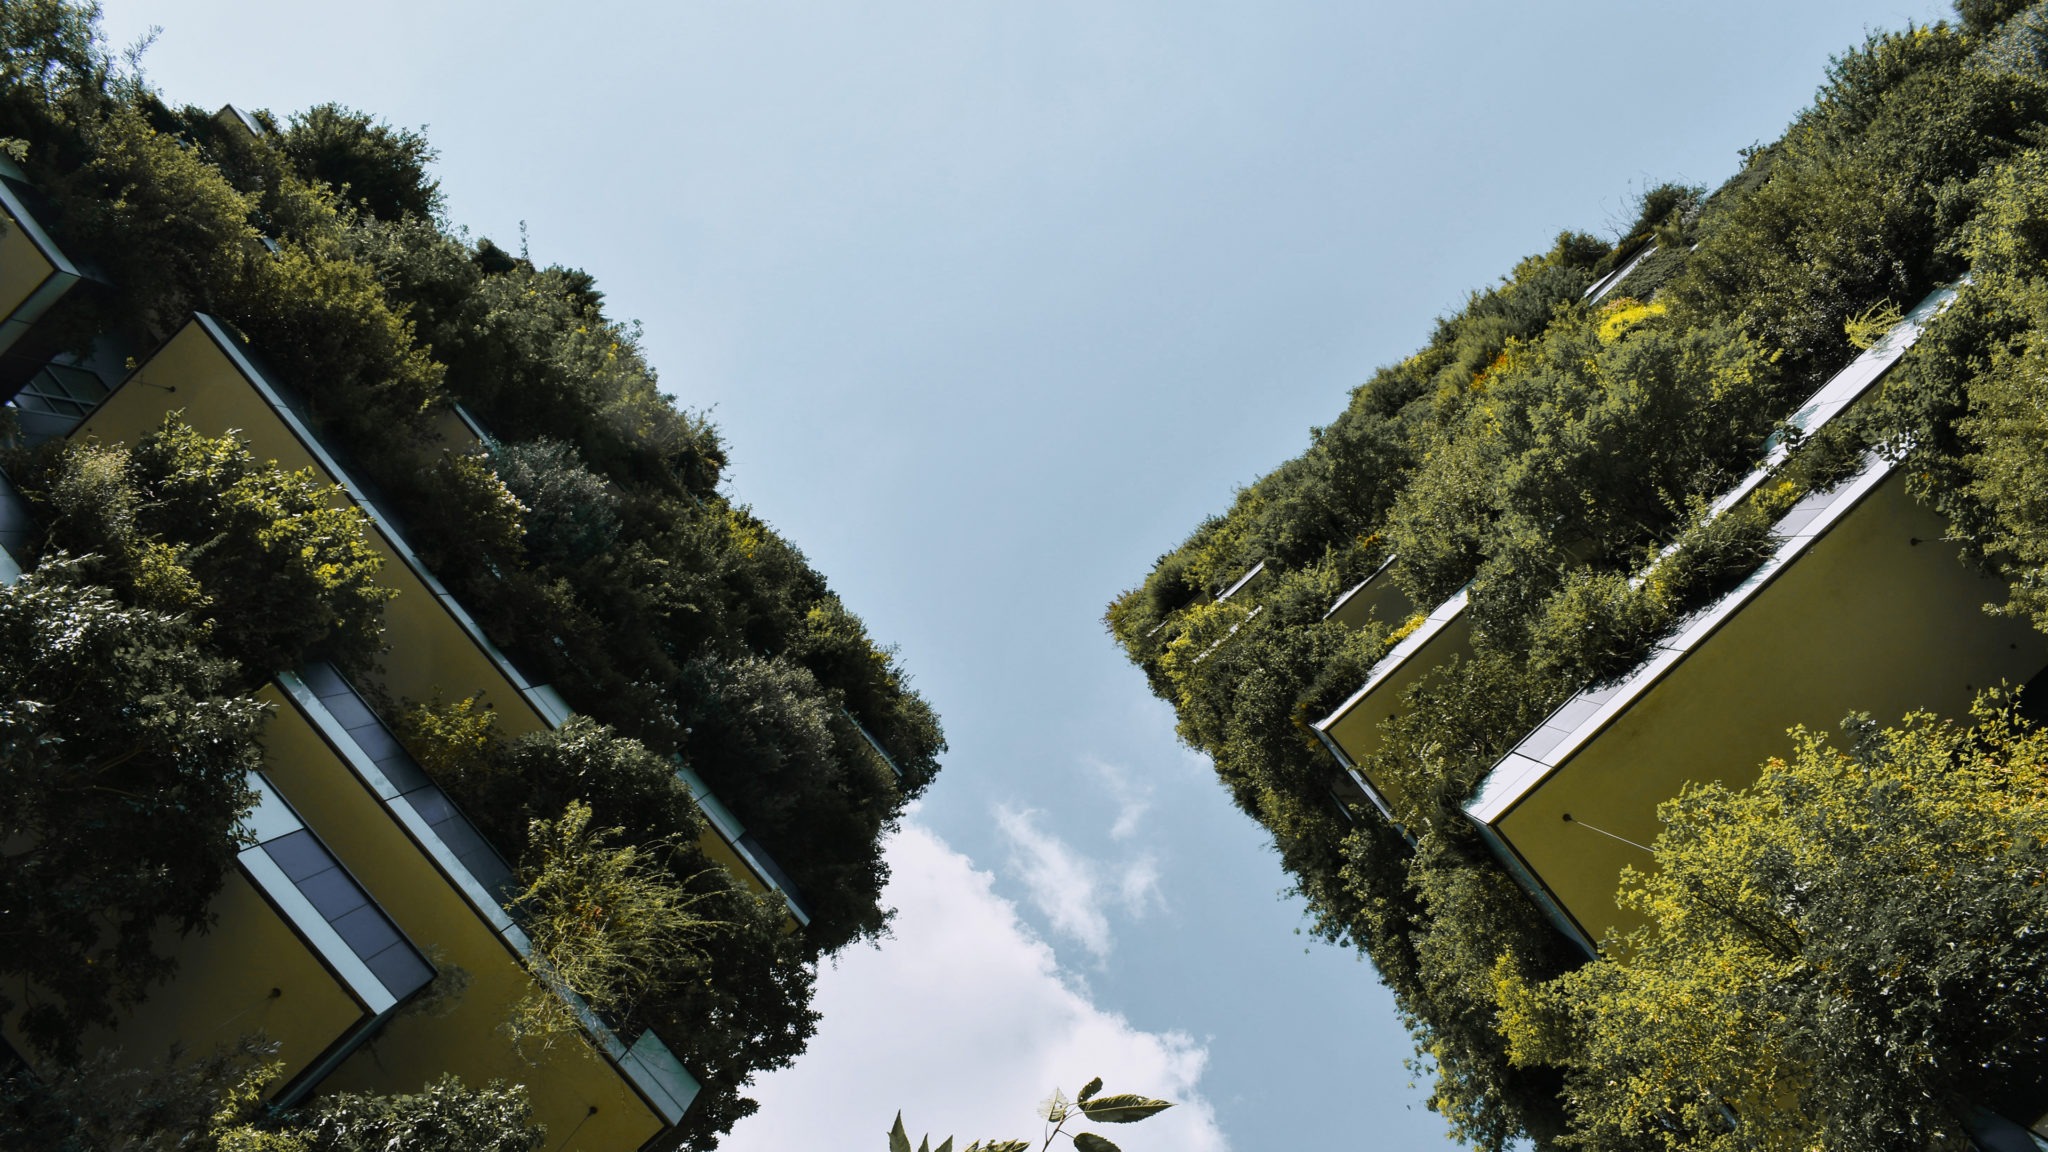 ECOTECTURE, eficacia green al servicio de la arquitectura, de Inalco